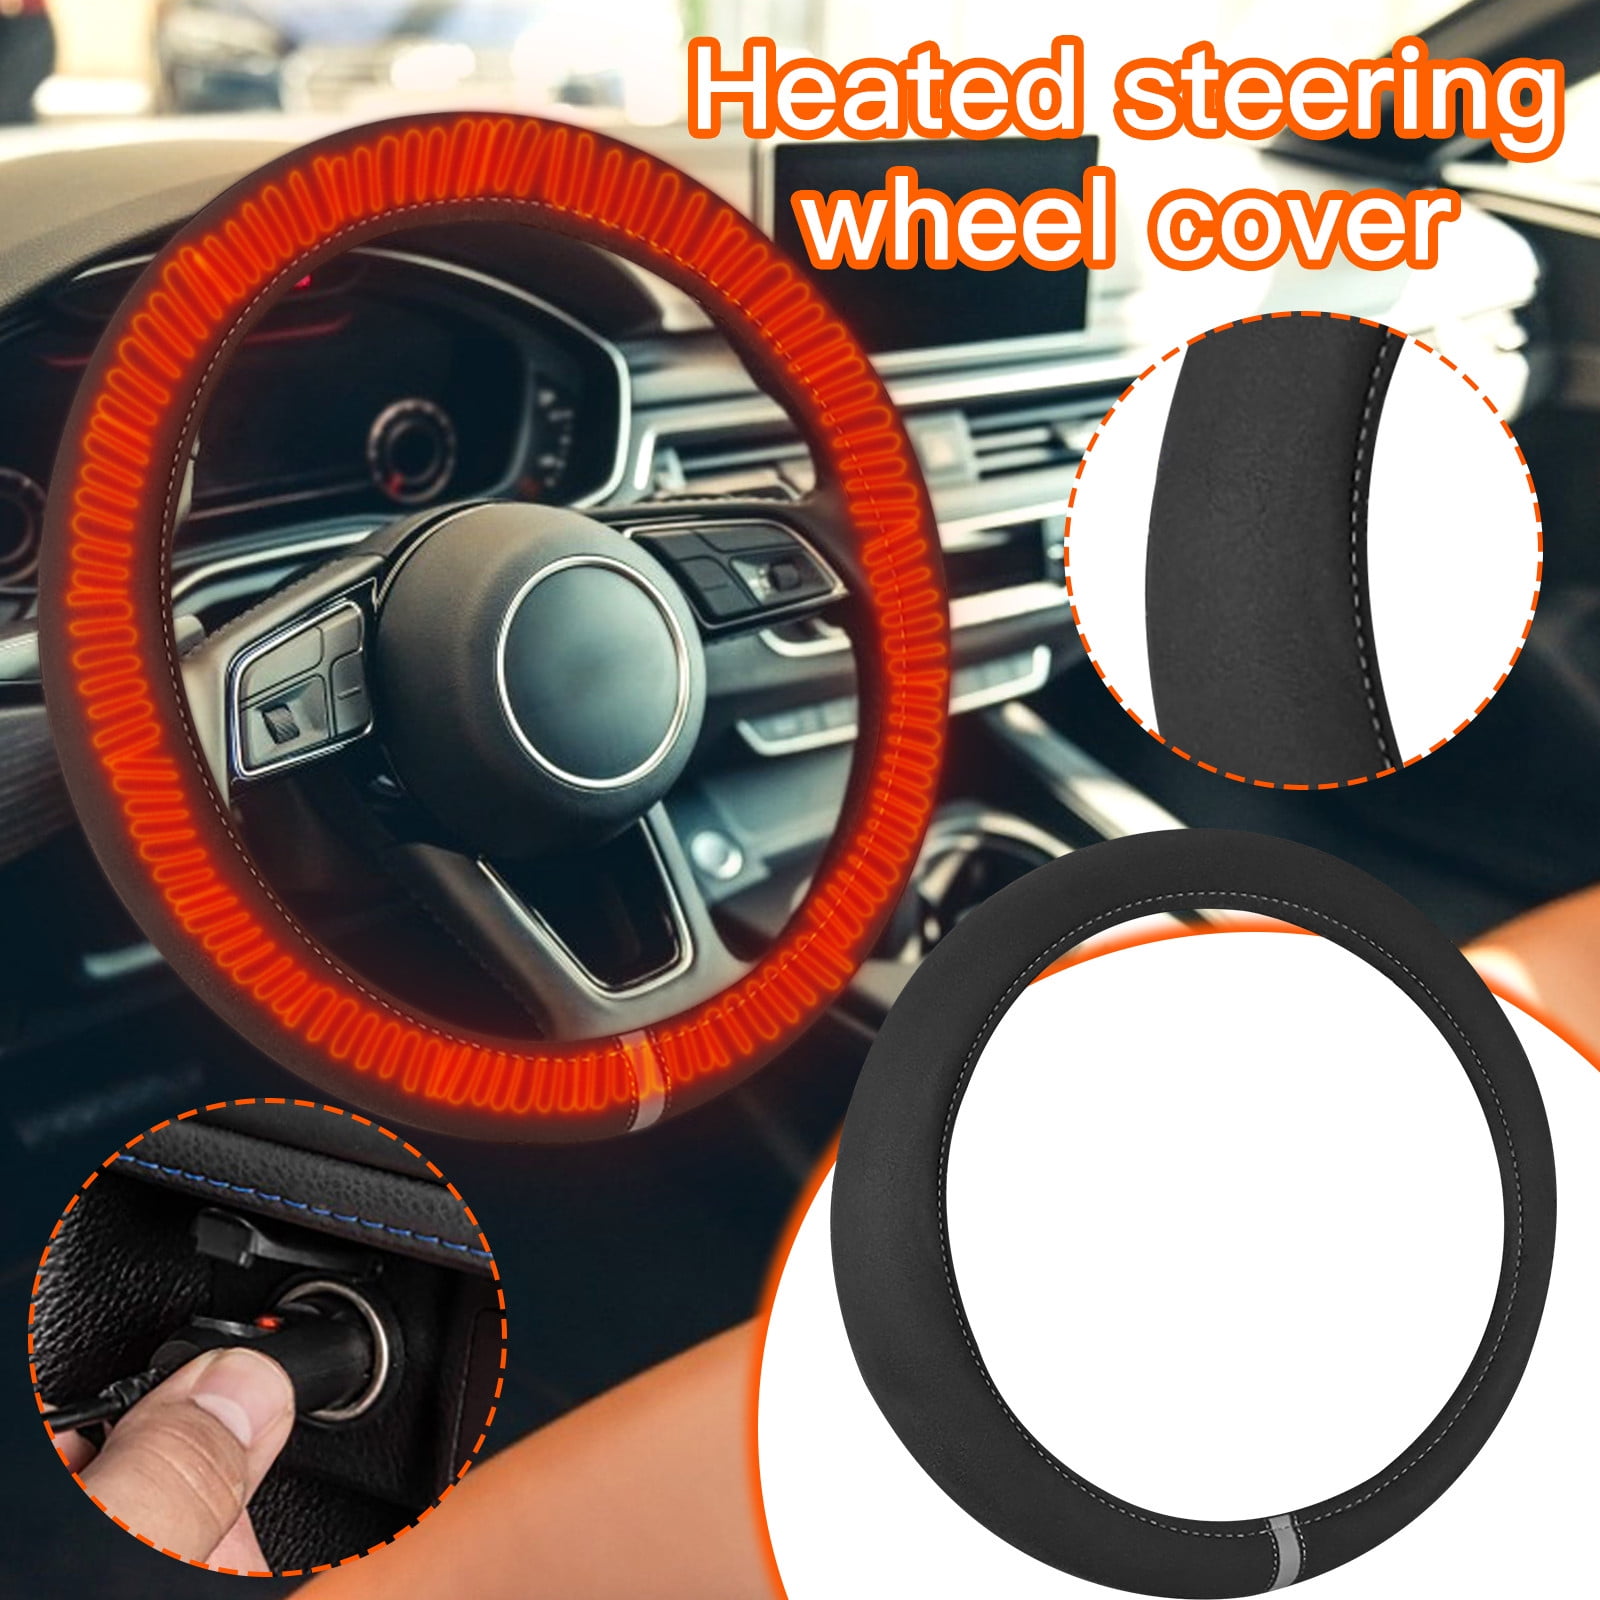 Custom 38cm Black Heated Steering Wheel Cover for Car - China